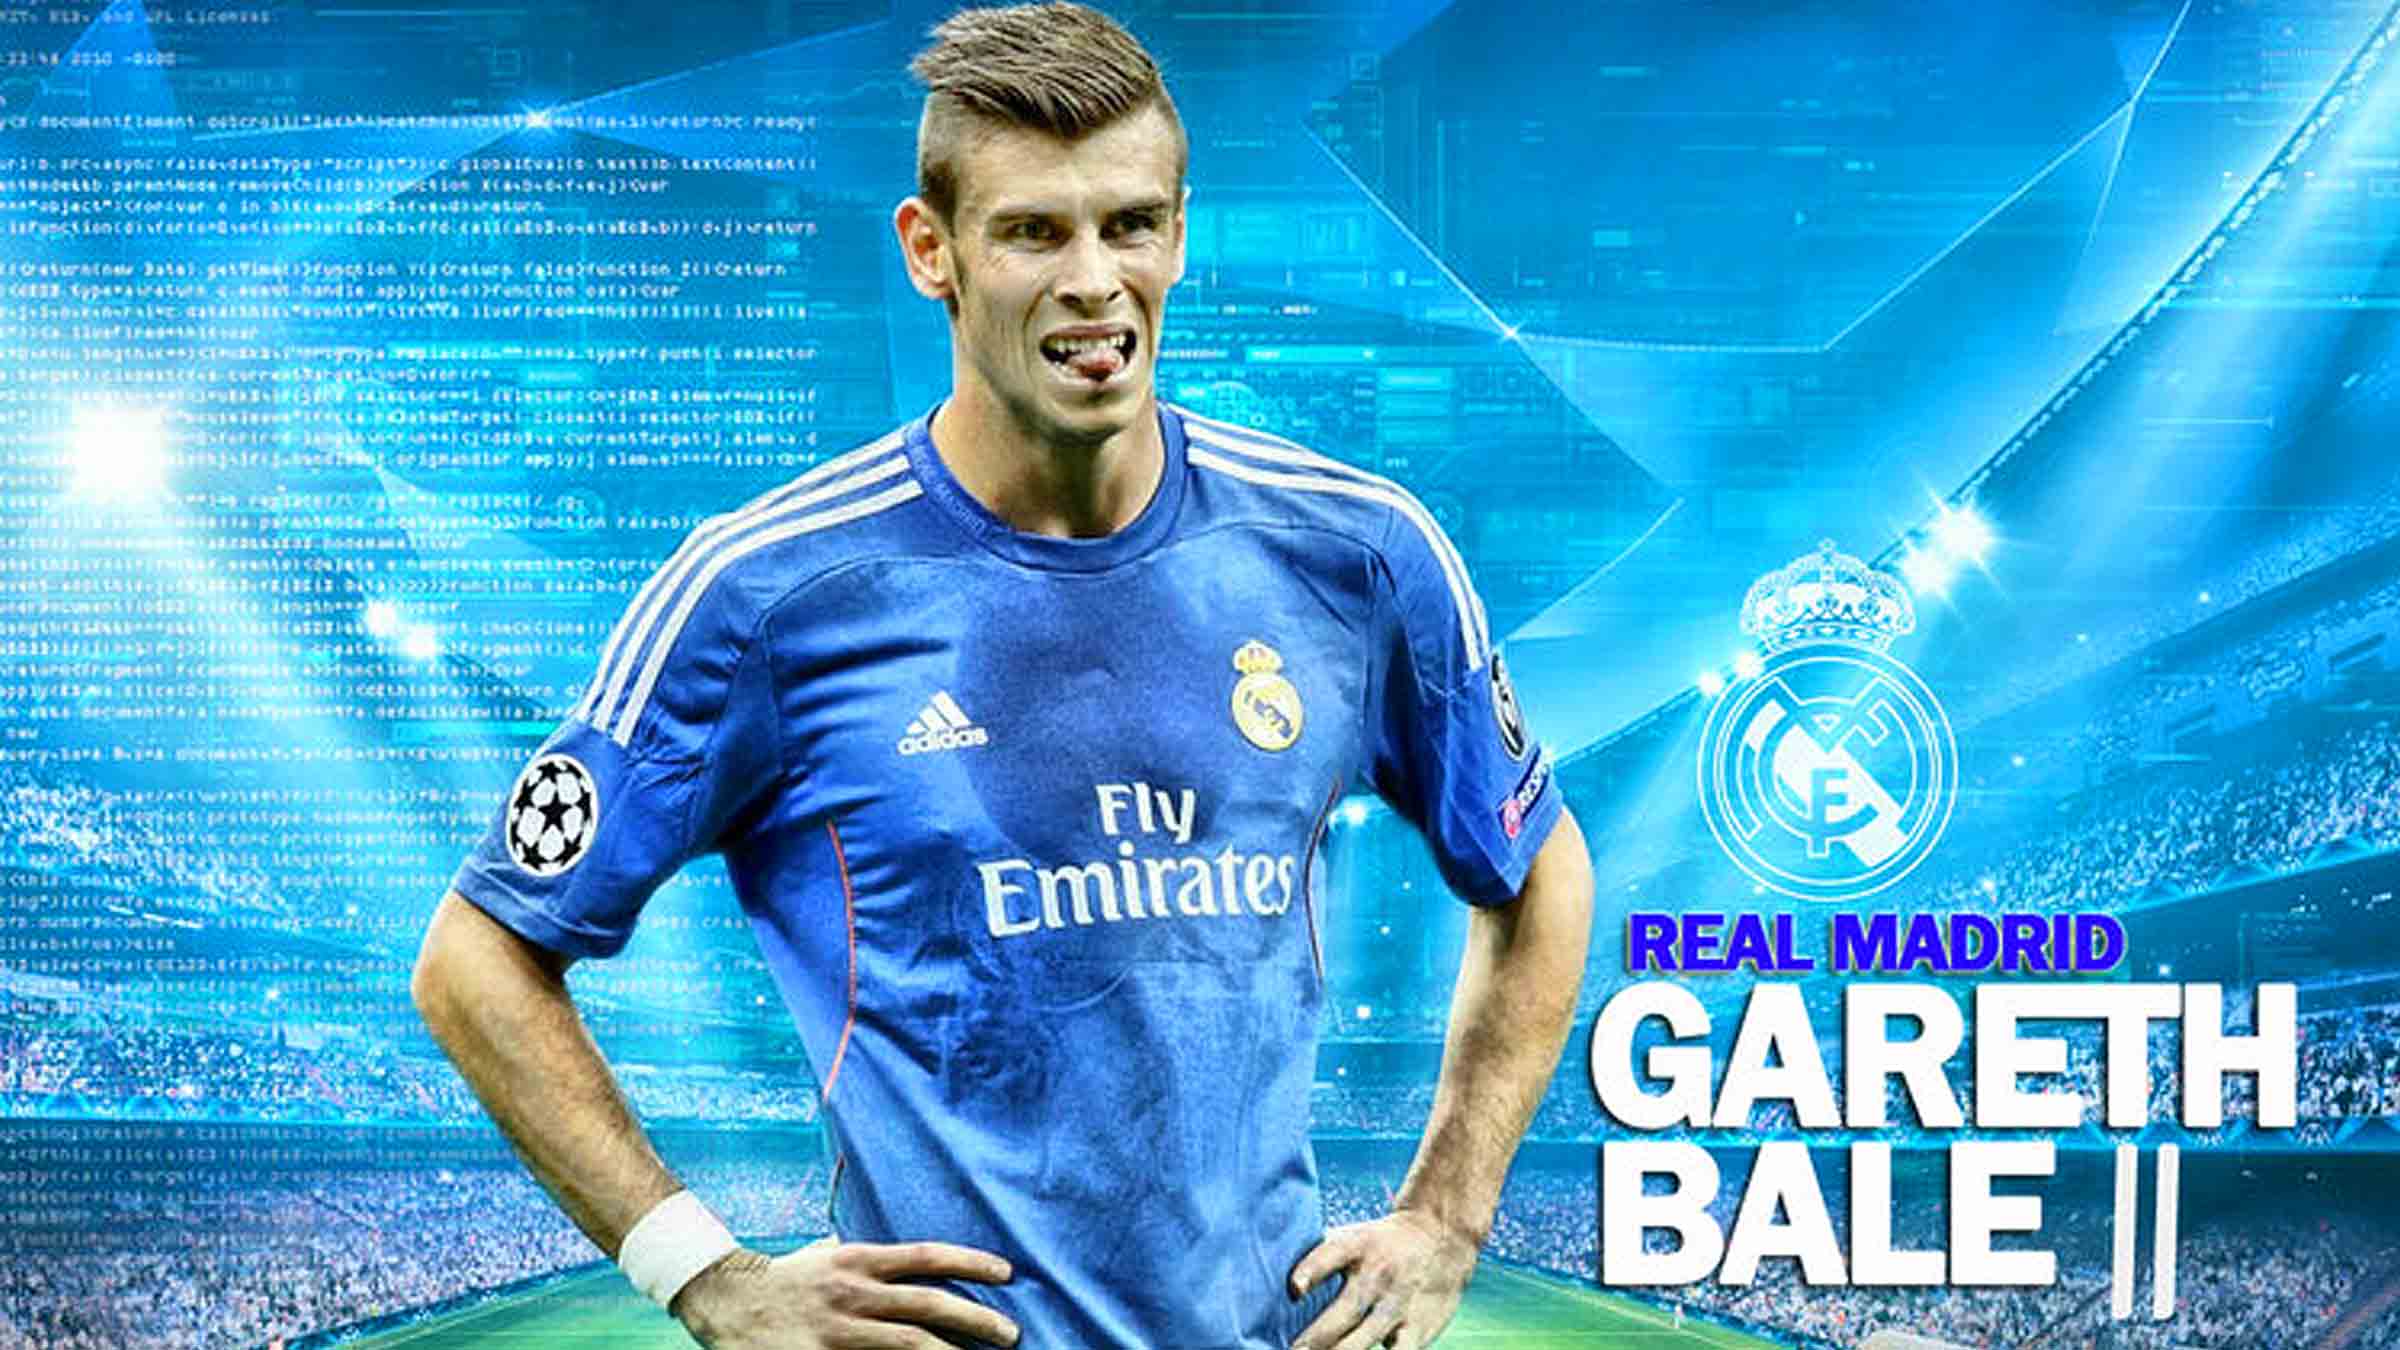 Gareth Bale Real Madrid football image for wallpaper